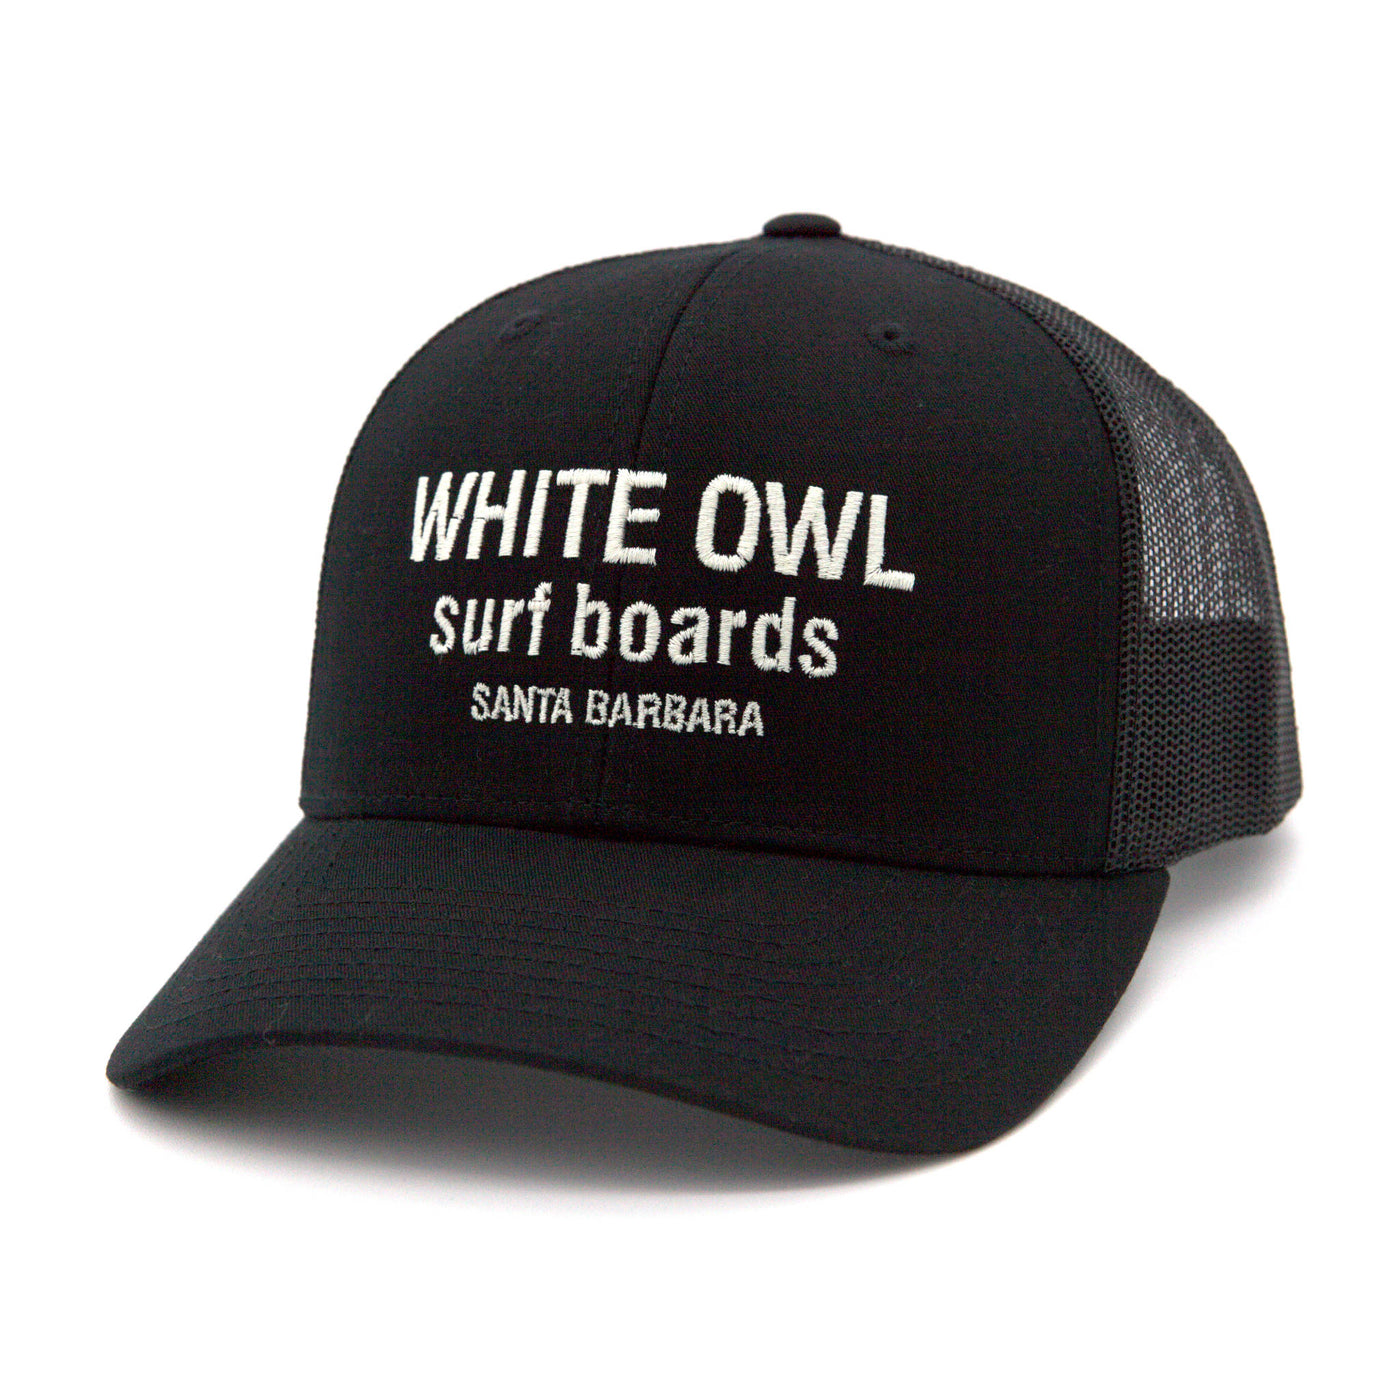 Owl Surfboards White Owl Classic Trucker Hat